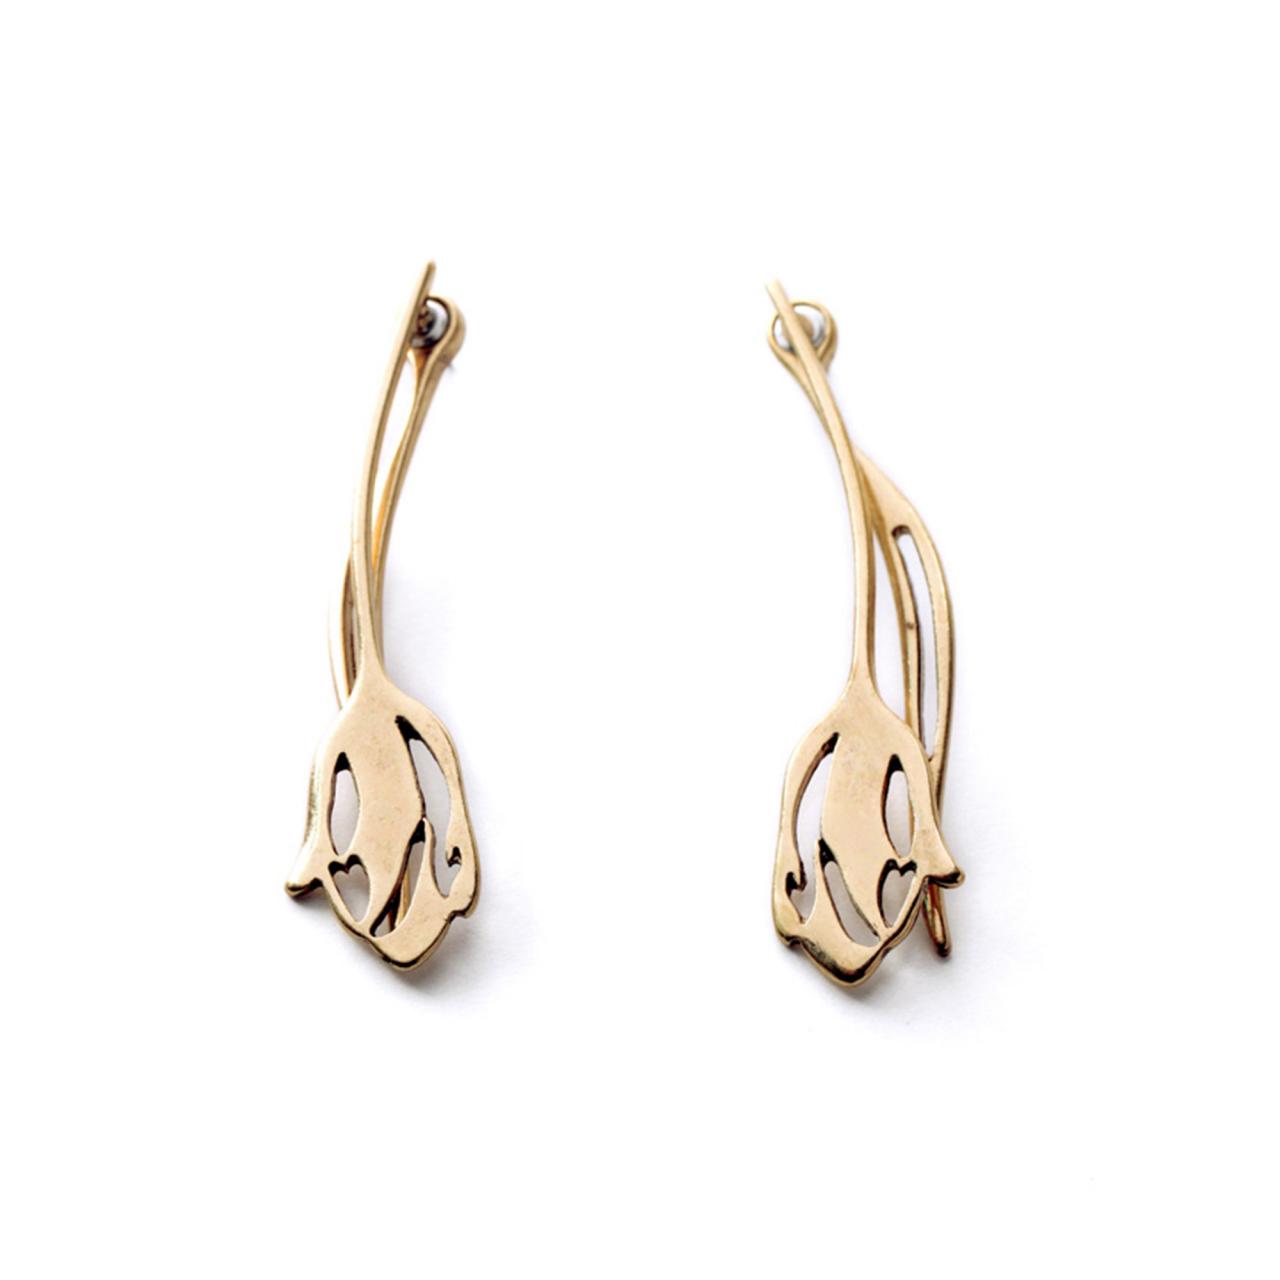 Vintage Earrings / Gold Earrings / Flower Earrings / Dangle Earrings / Flower Jewelry / Leaf Earrings / Brass Earrings / Rustic Earrings